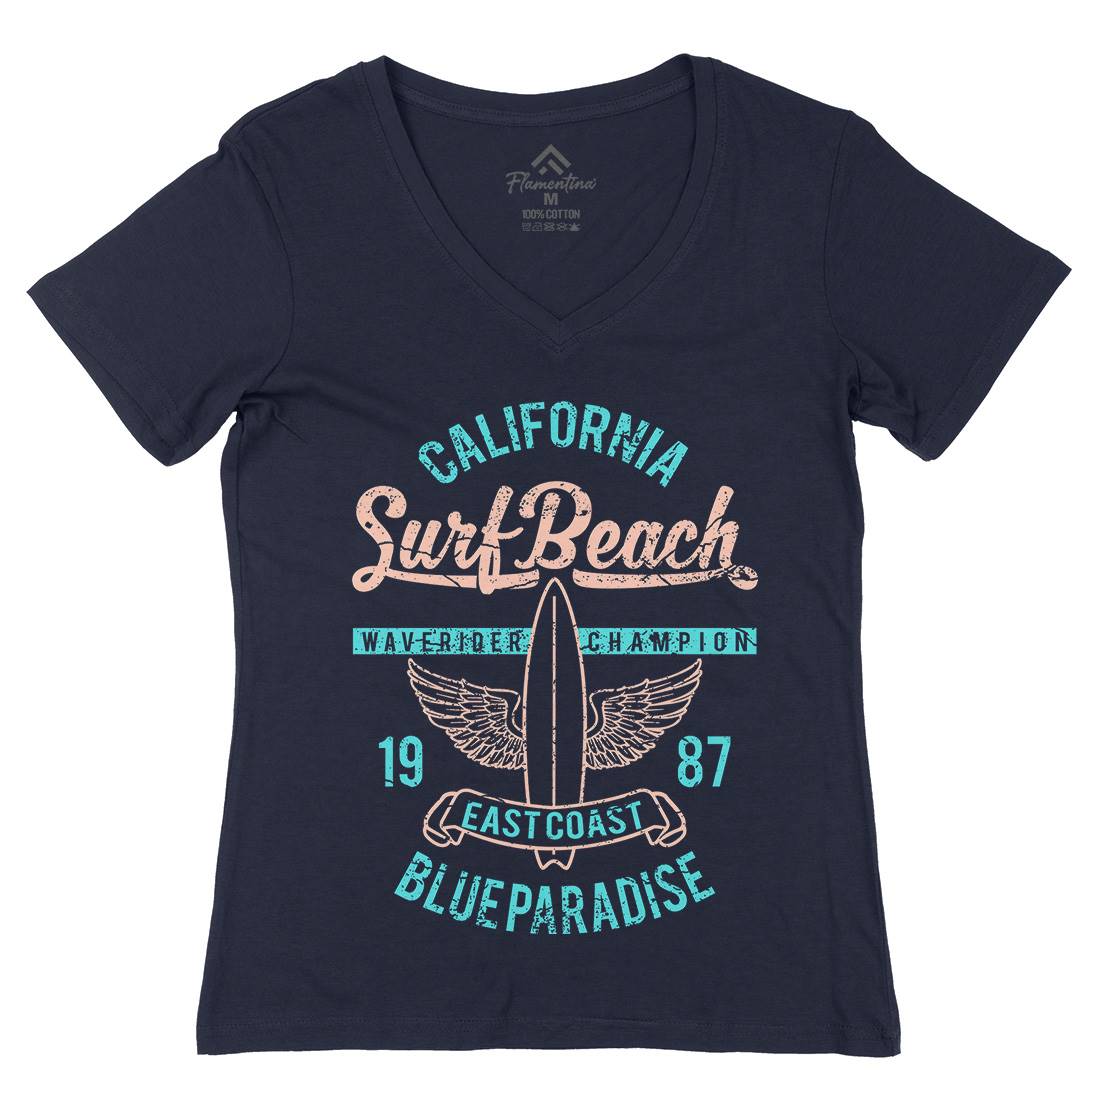 Beach Womens Organic V-Neck T-Shirt Surf A168